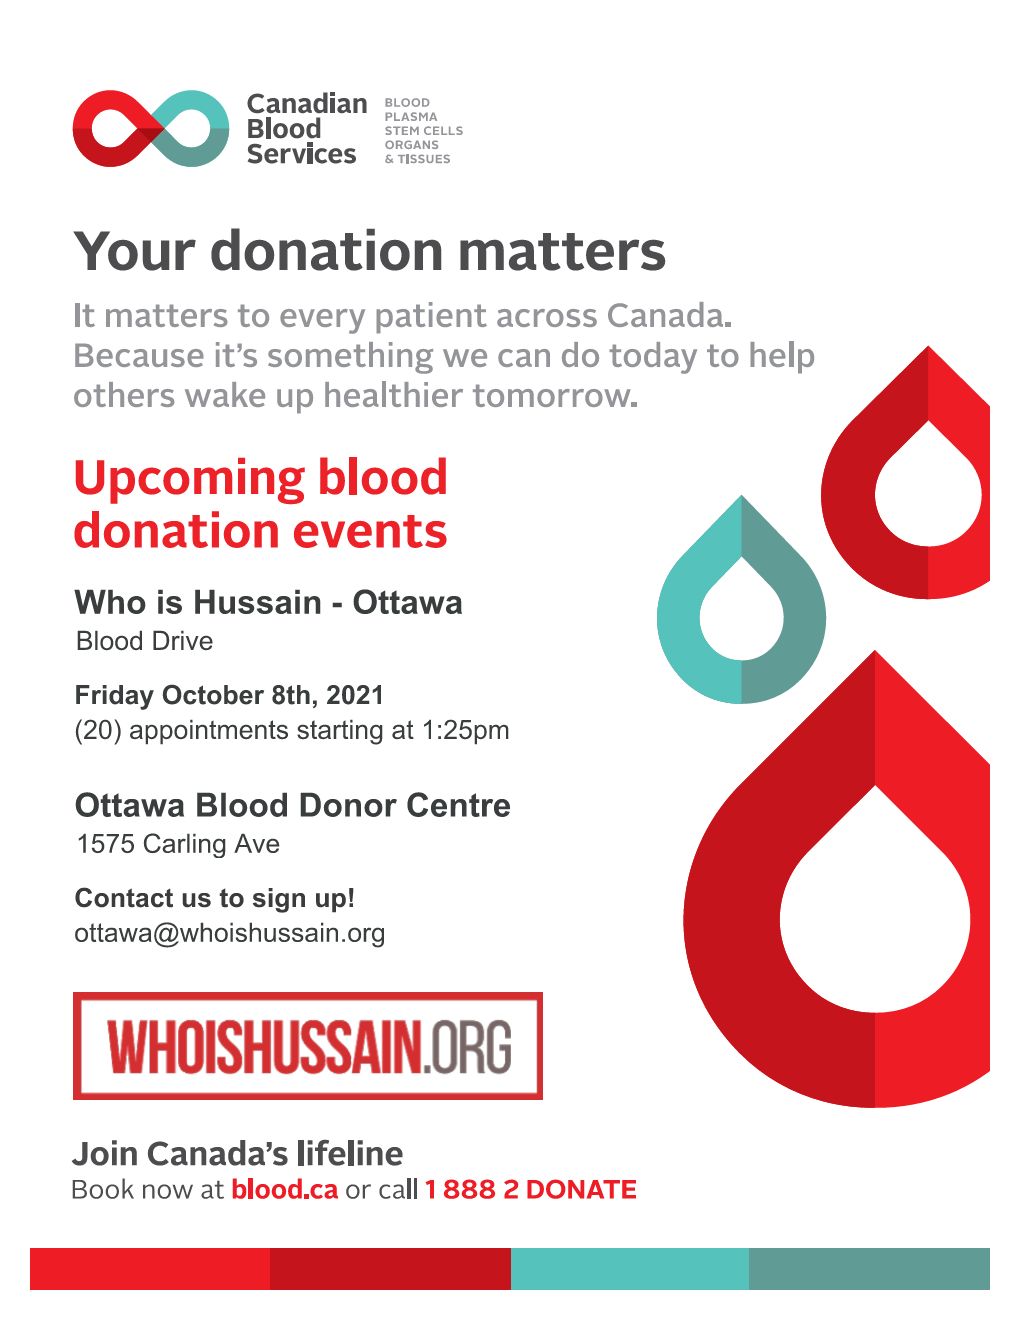 WIH Ottawa Blood Drive 1